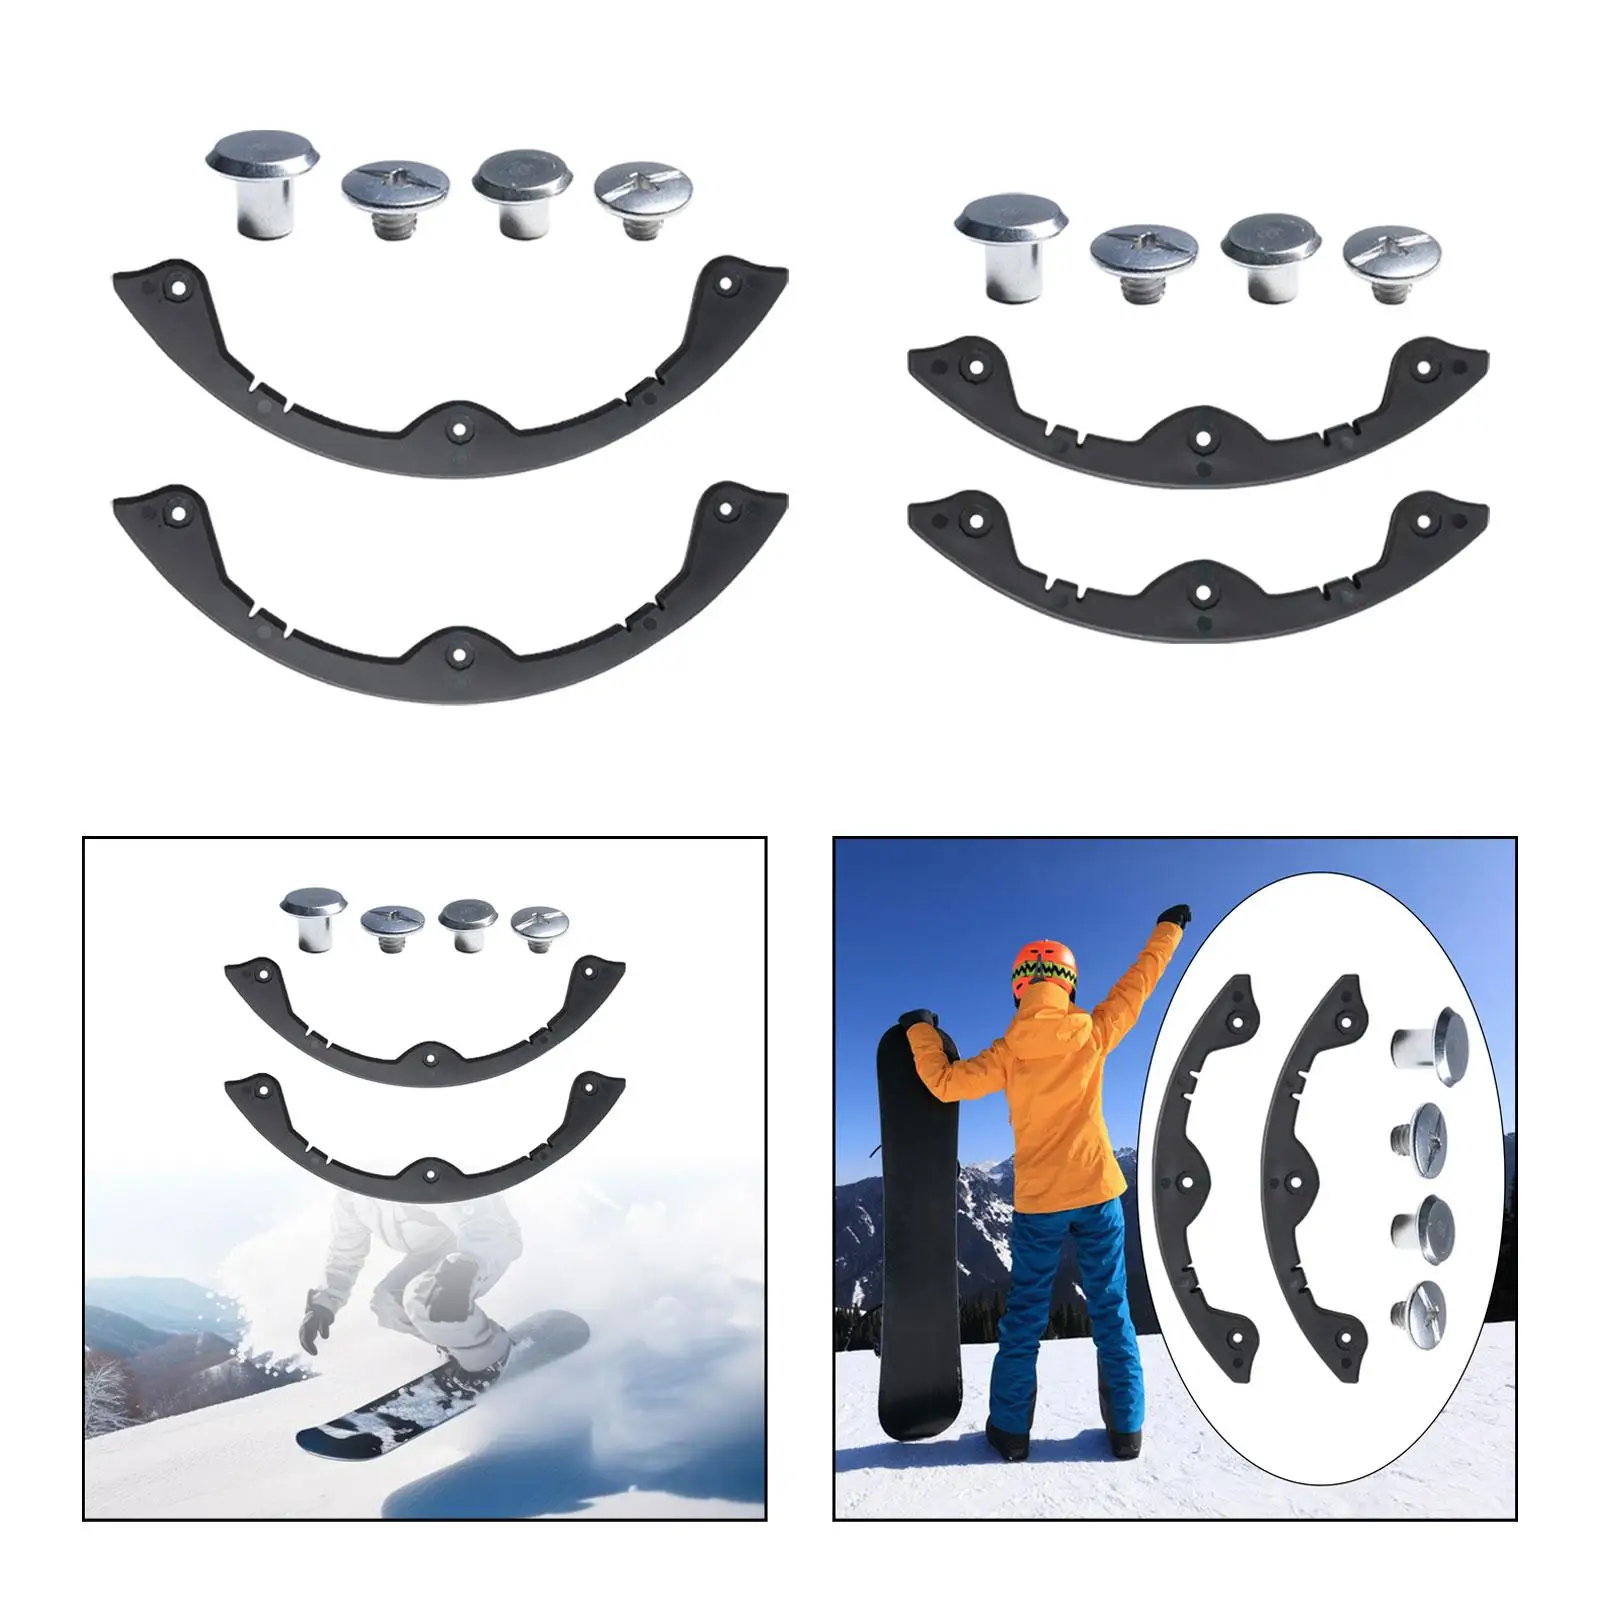 2x Snowboard Protection Tape, Longboard Deck Cover Tape, Skateboard Deck Guard